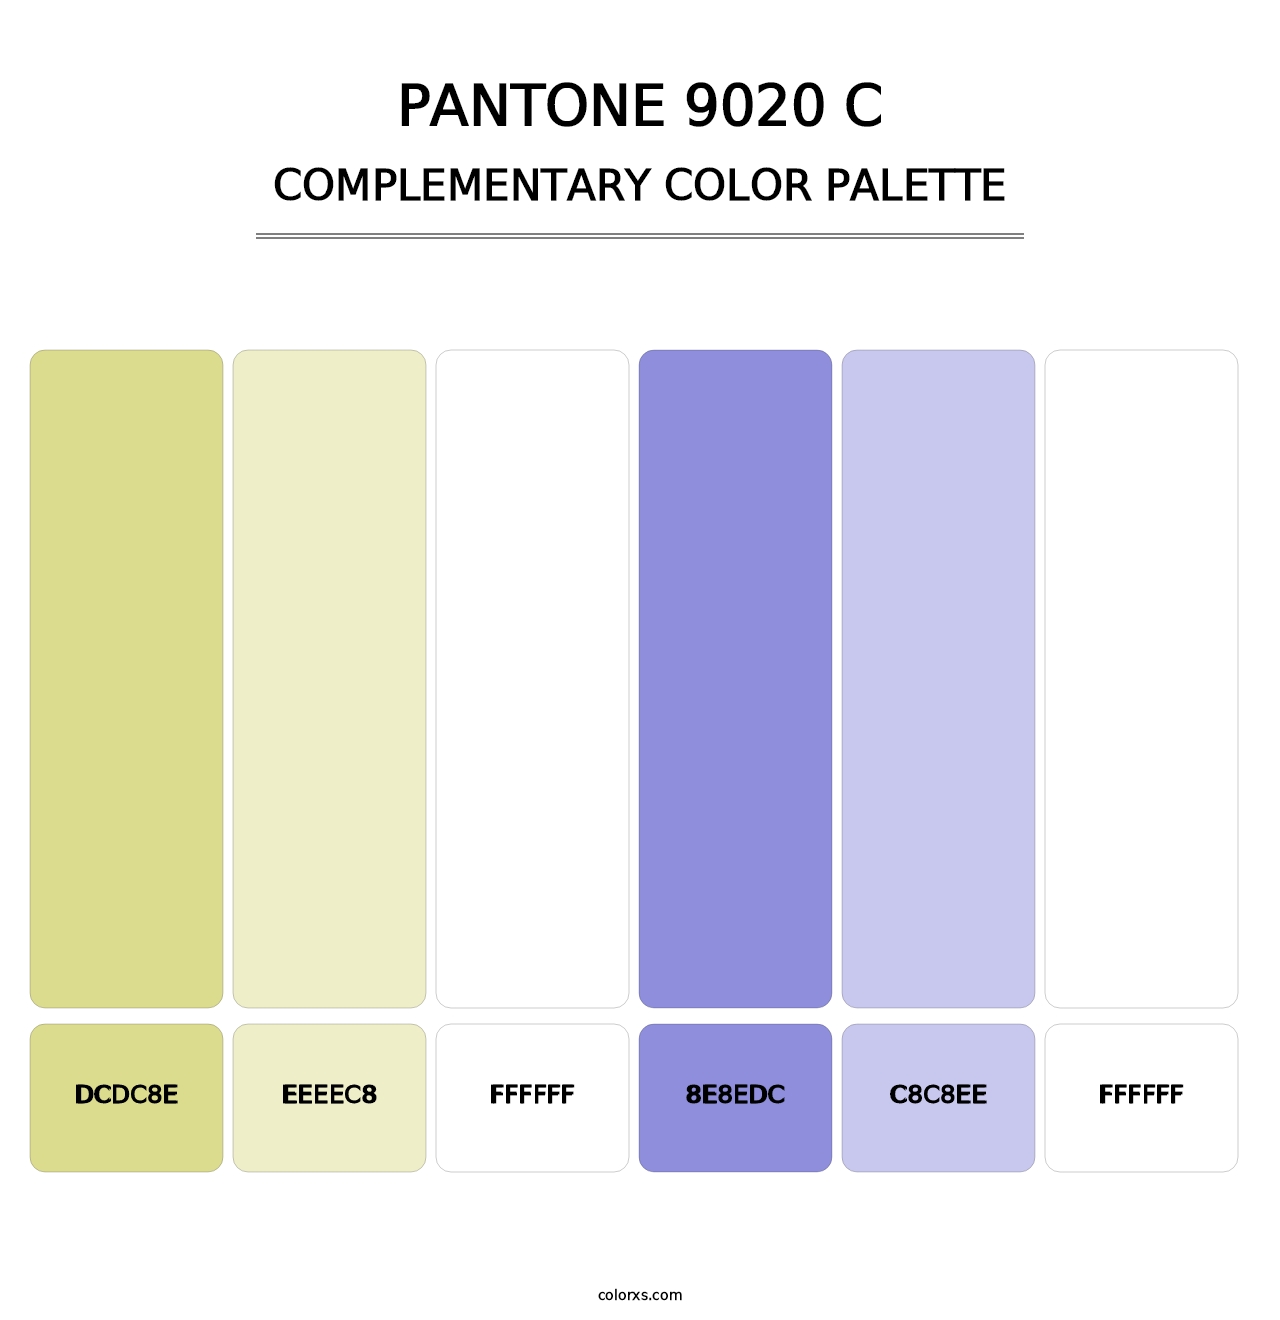 PANTONE 9020 C - Complementary Color Palette